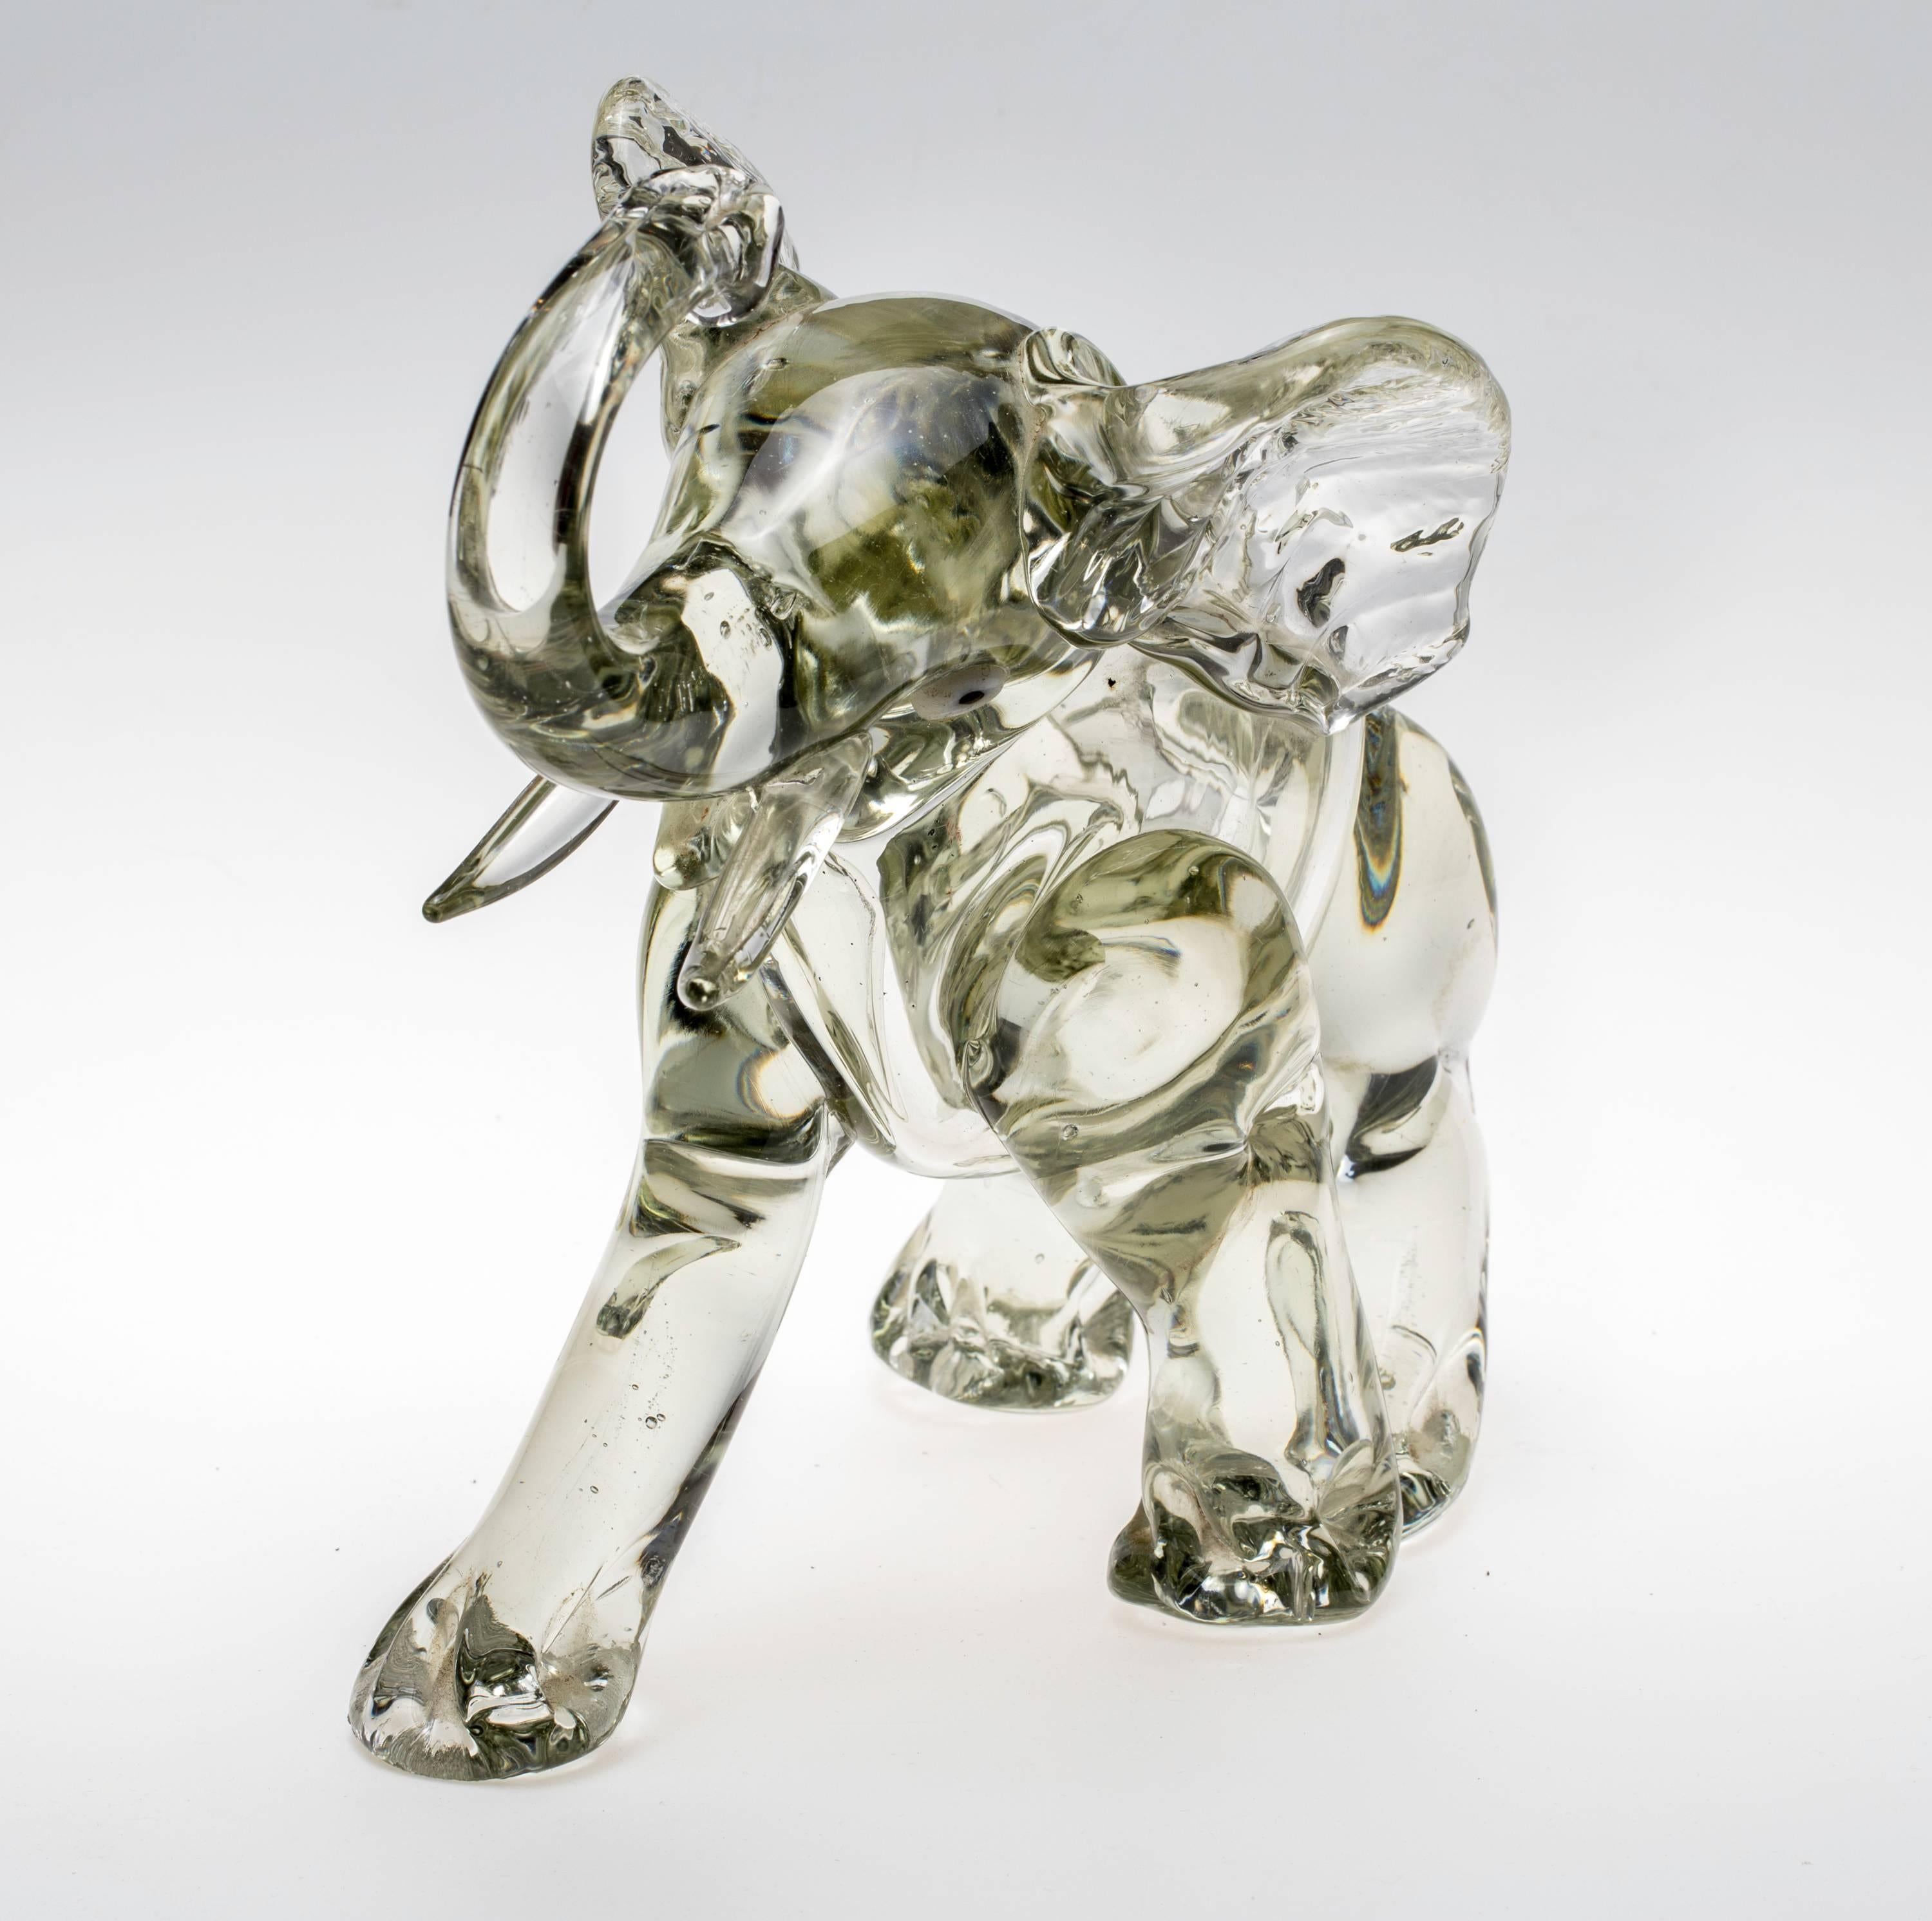 Hand-Crafted Murano Glass Elephant Figurine